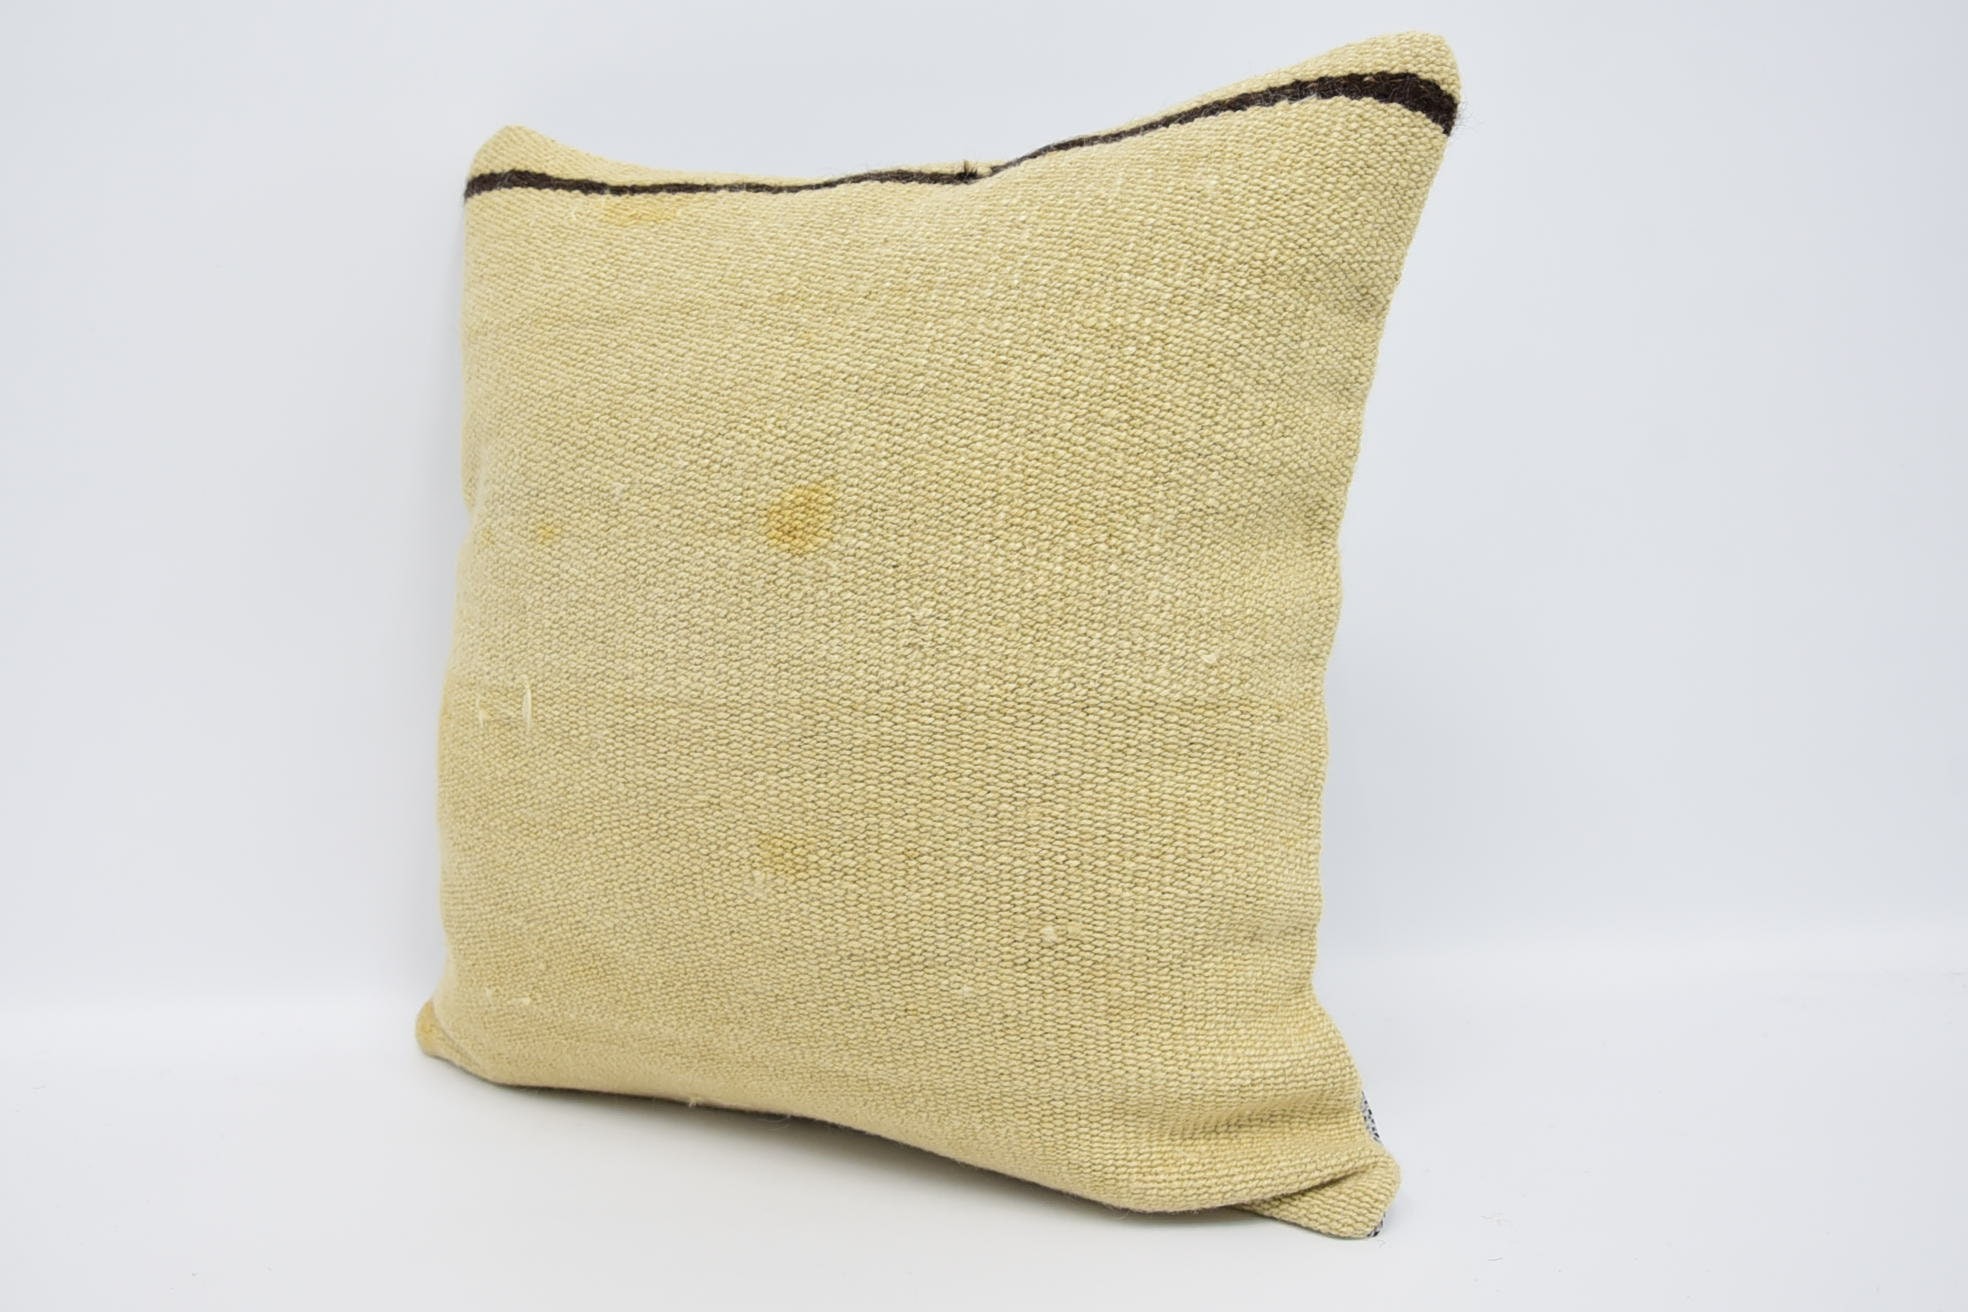 Ethnical Kilim Rug Pillow, 18"x18" Beige Cushion Cover, Boho Pillow Sham Cover, Crochet Pattern Pillow, Handmade Kilim Cushion